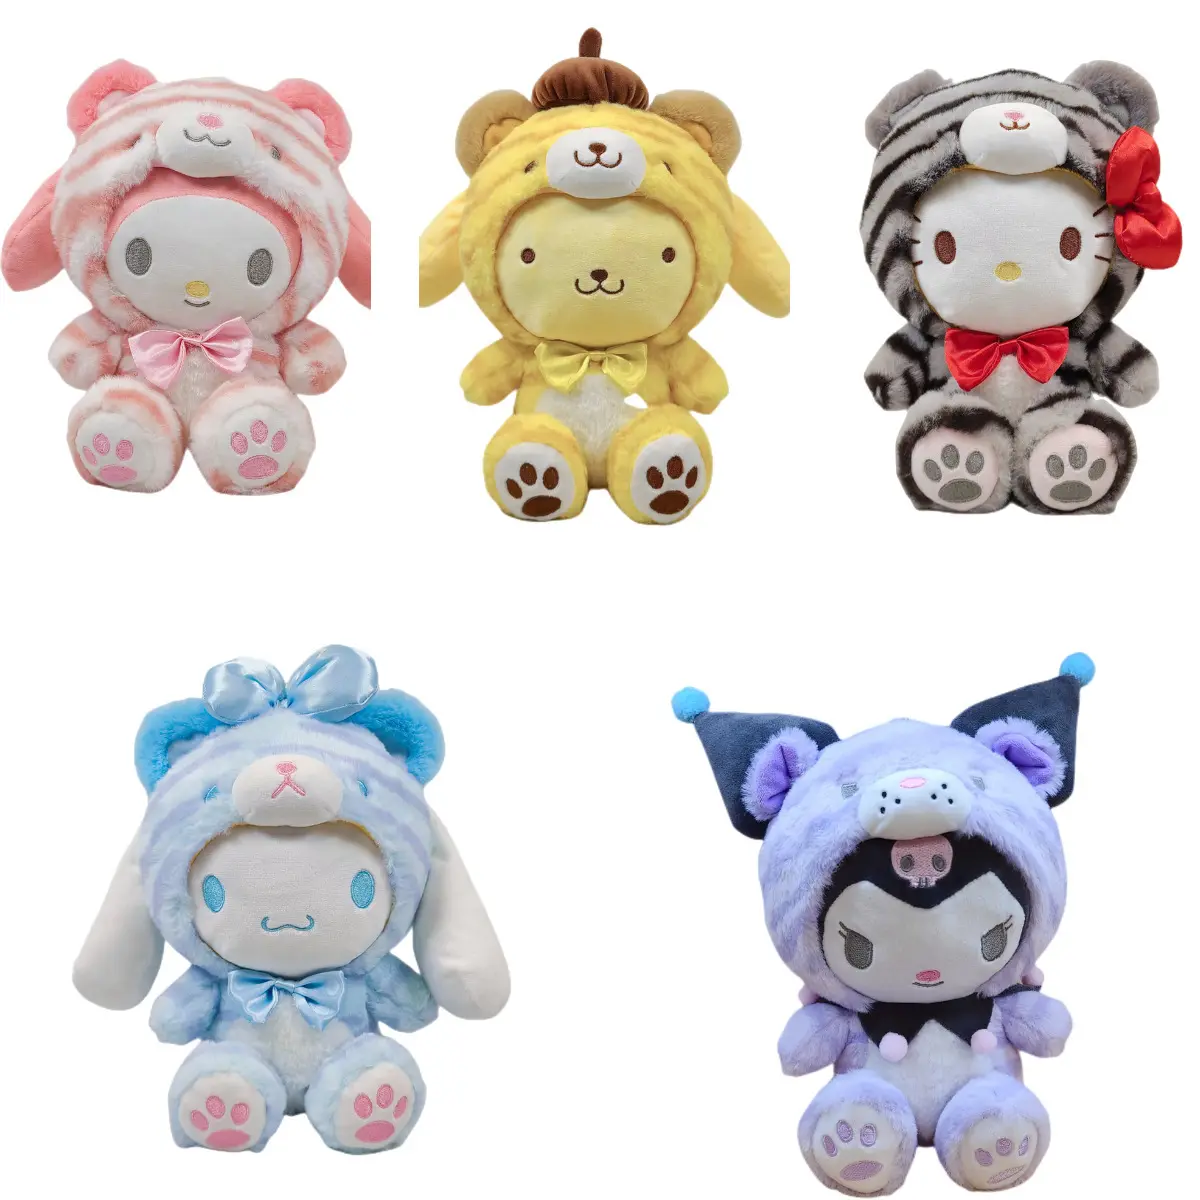 Cute kawaii Sanrio wears a coat as a tiger bear child gift companion anime plush toys